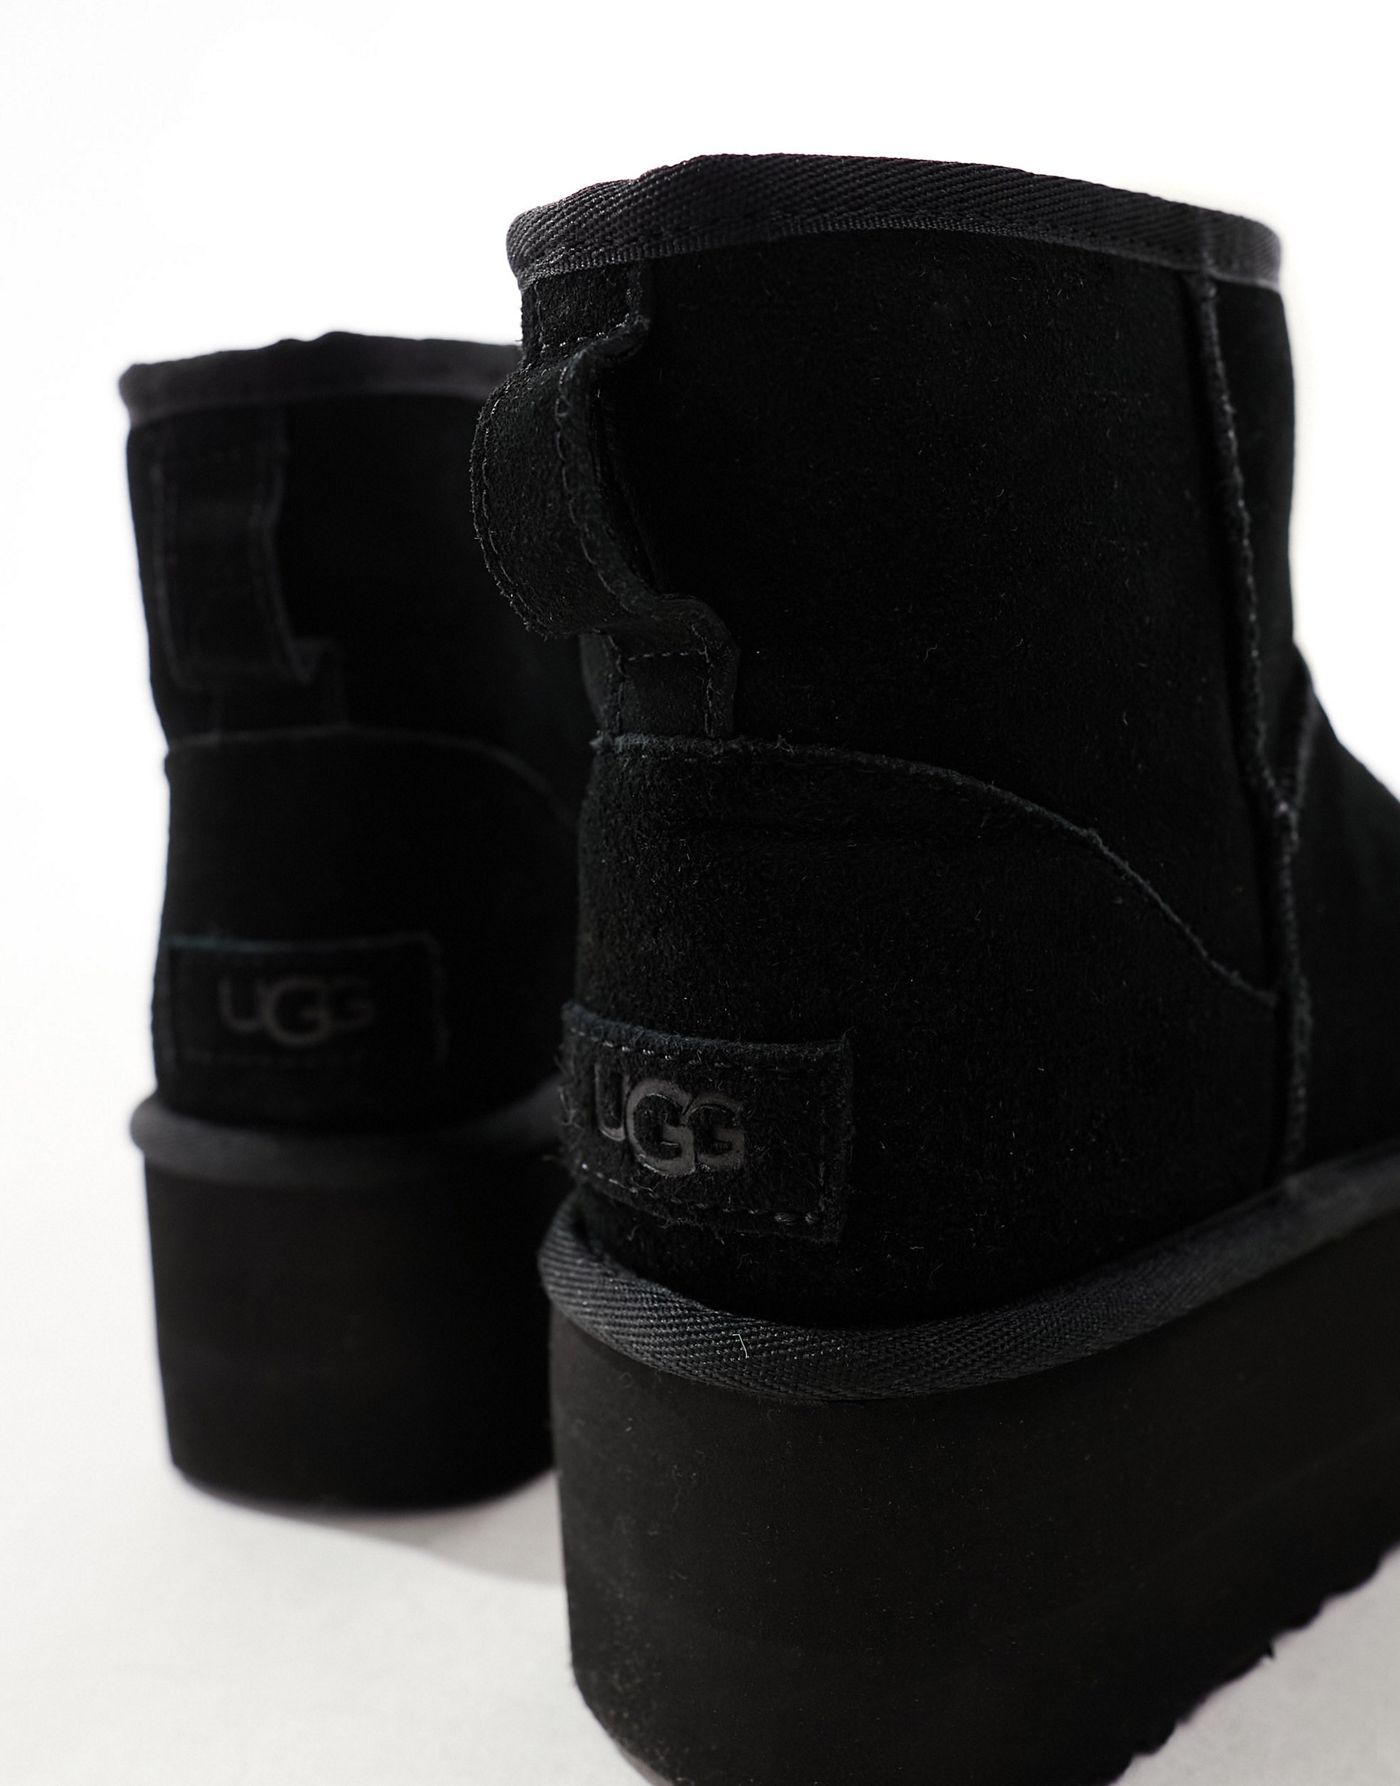 UGG Classic mini platform boots in black